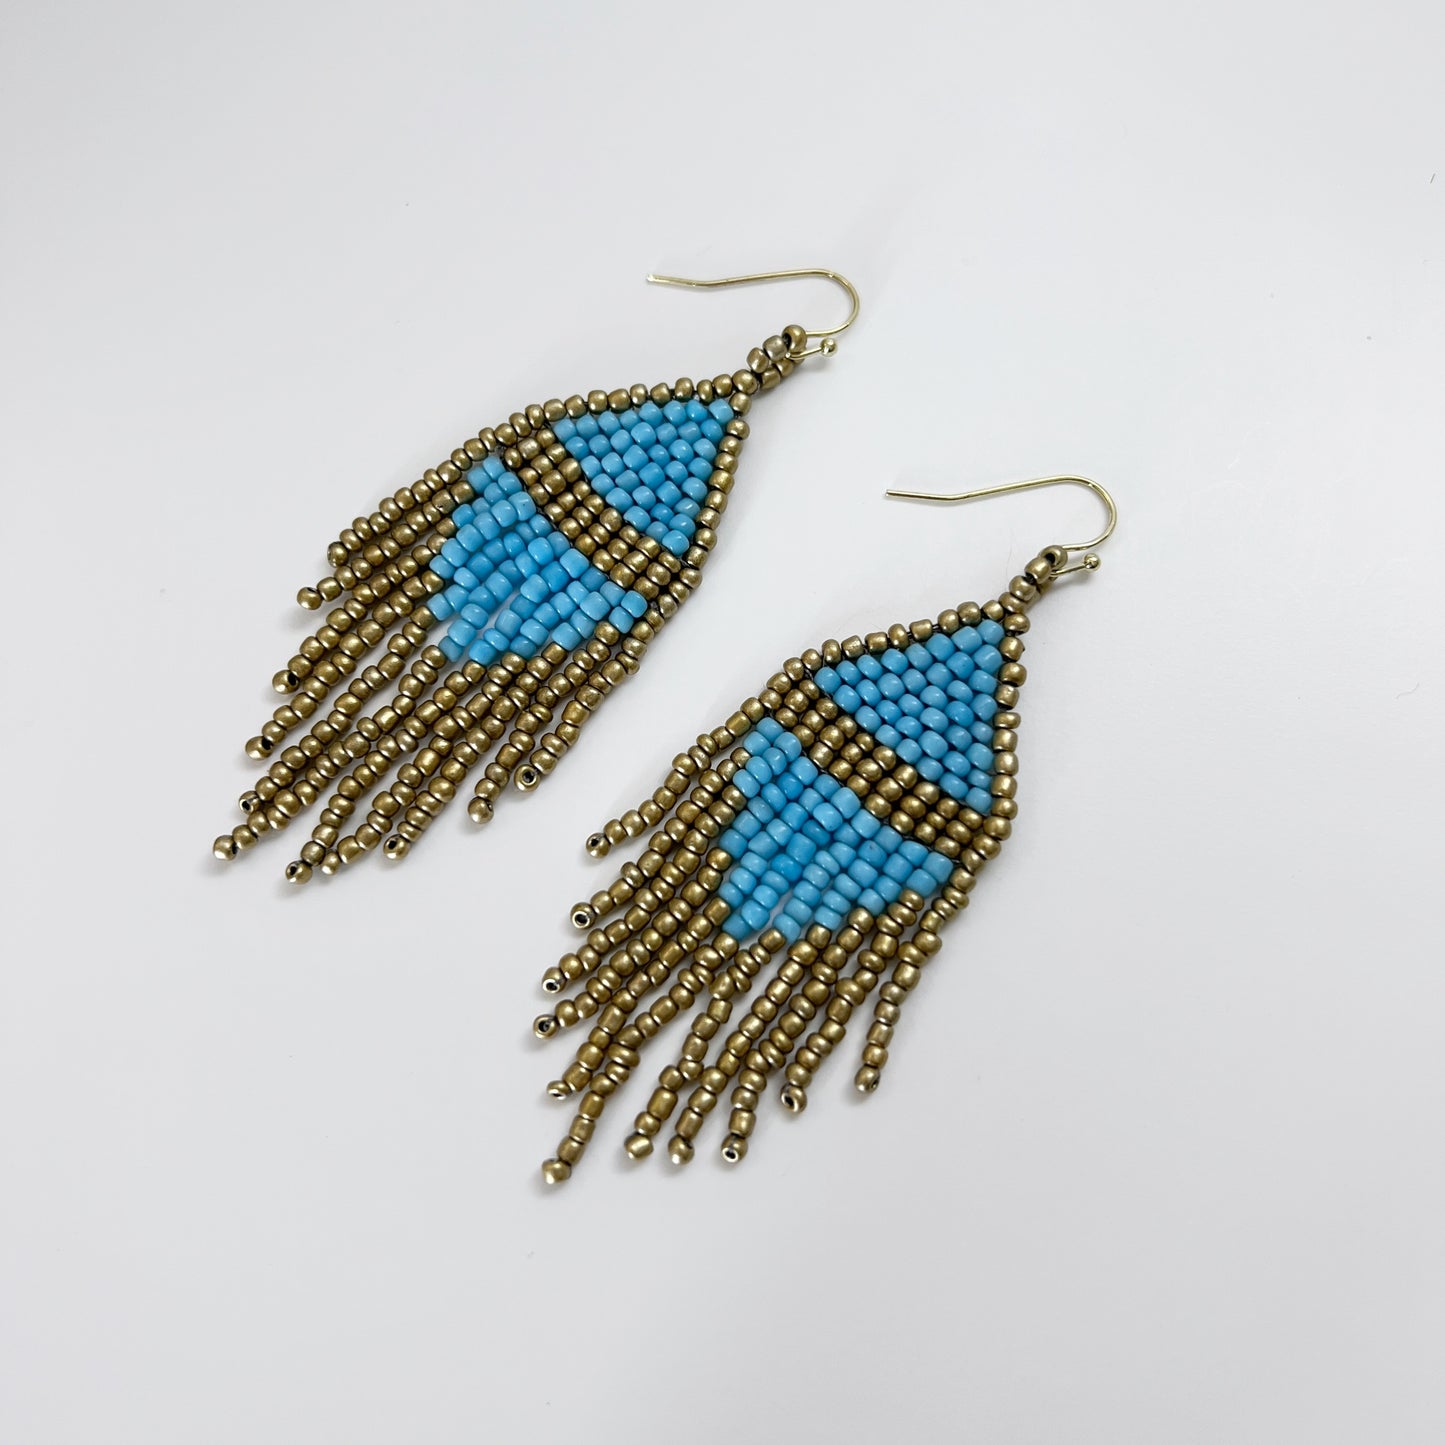 Hand-Woven Sky Blue and Gold Fringe Earrings